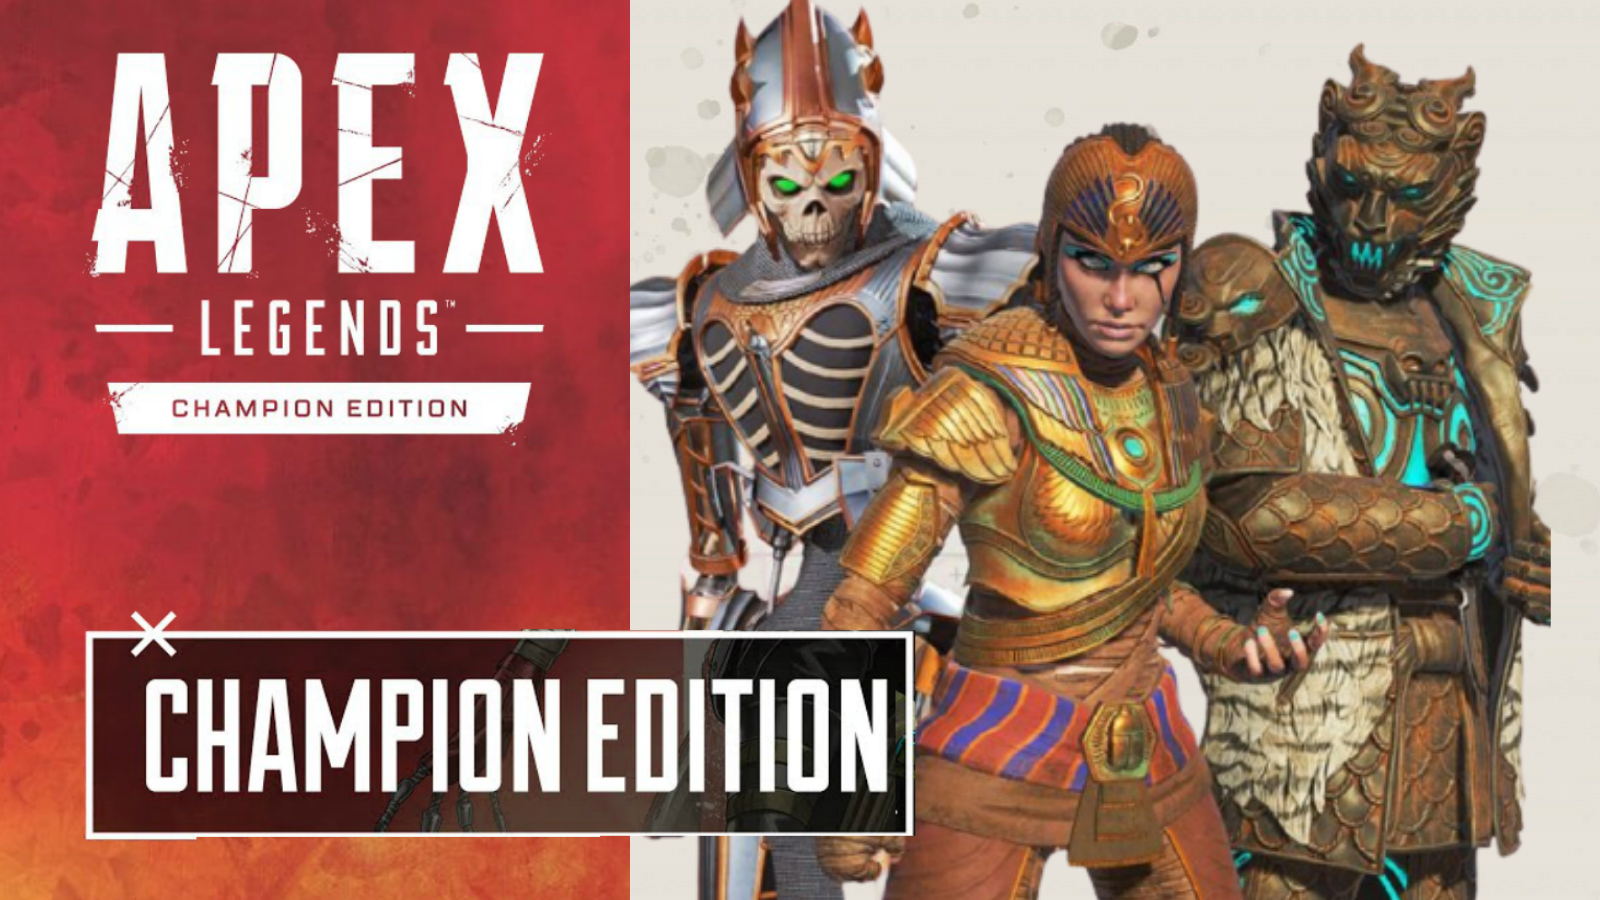 Apex Legends - Champion Edition (Nintendo Switch) Full Game